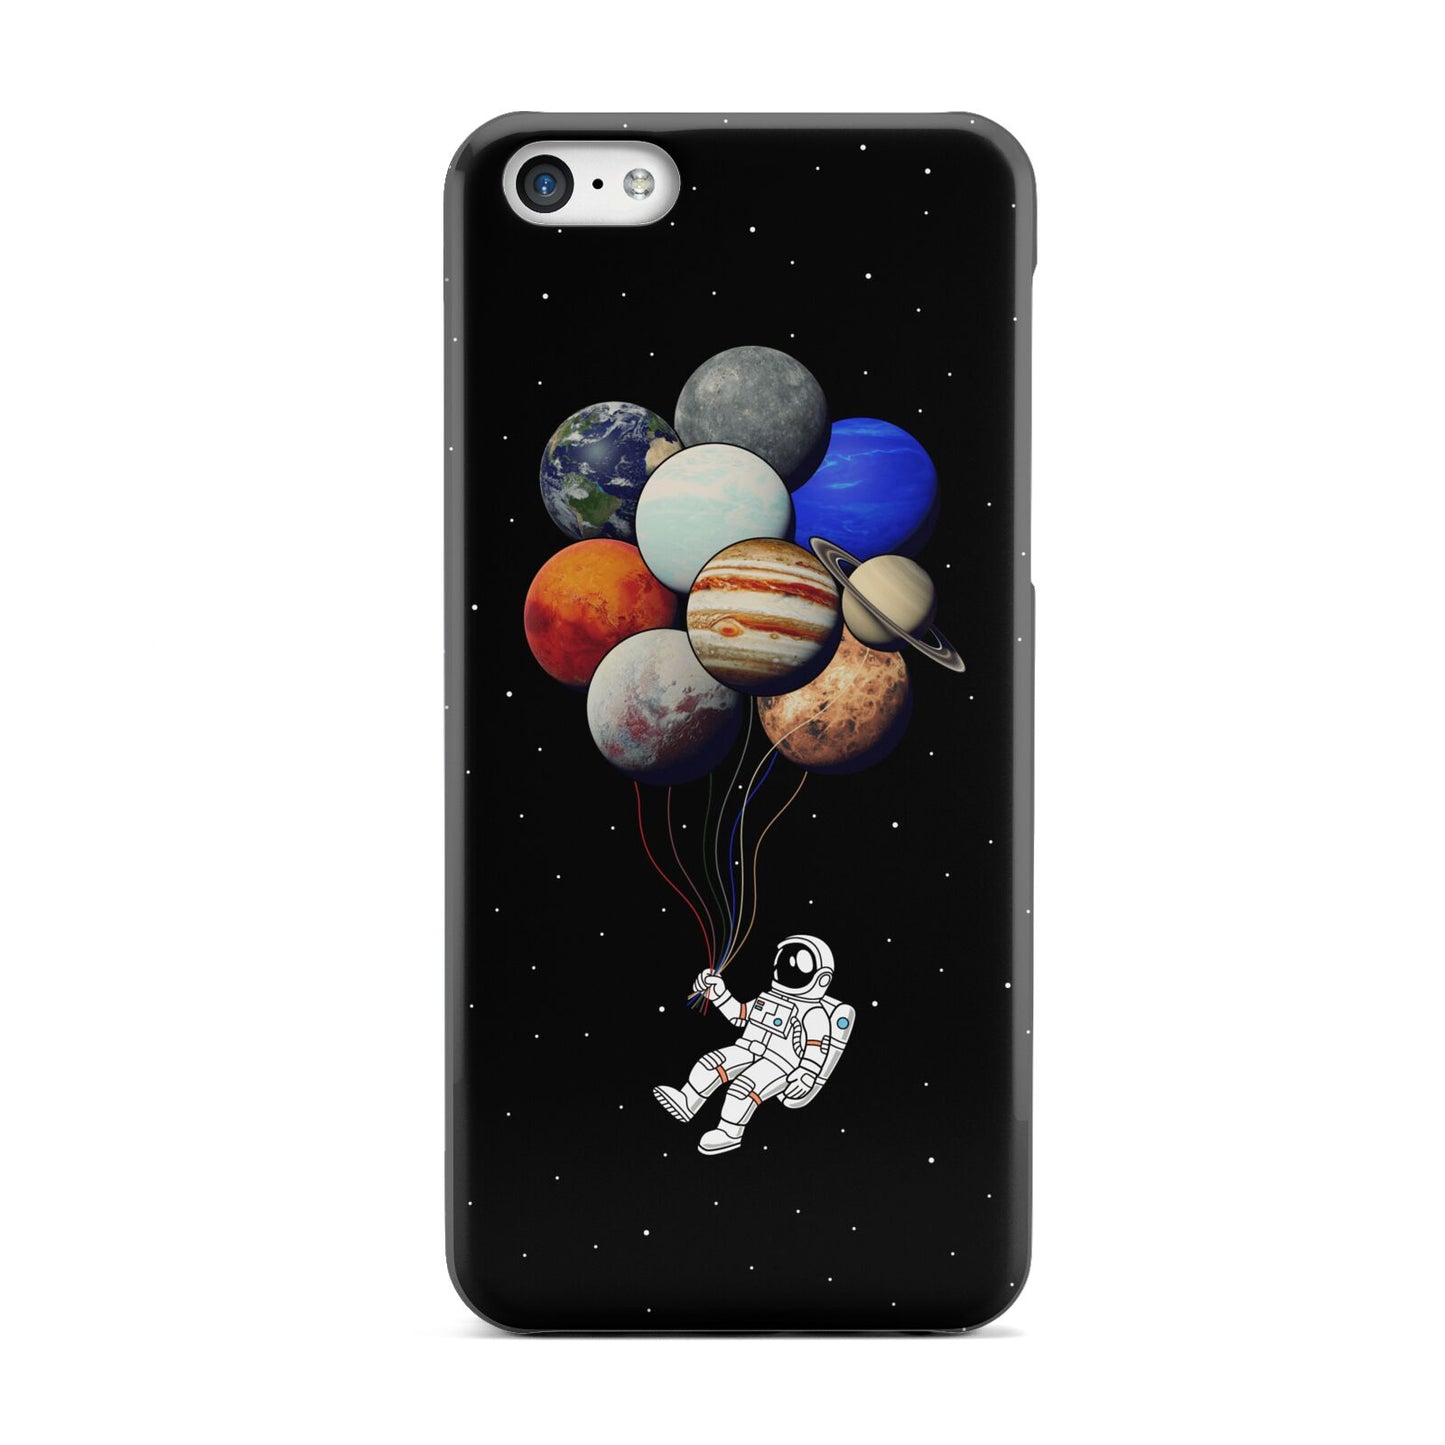 Astronaut Planet Balloons Apple iPhone 5c Case